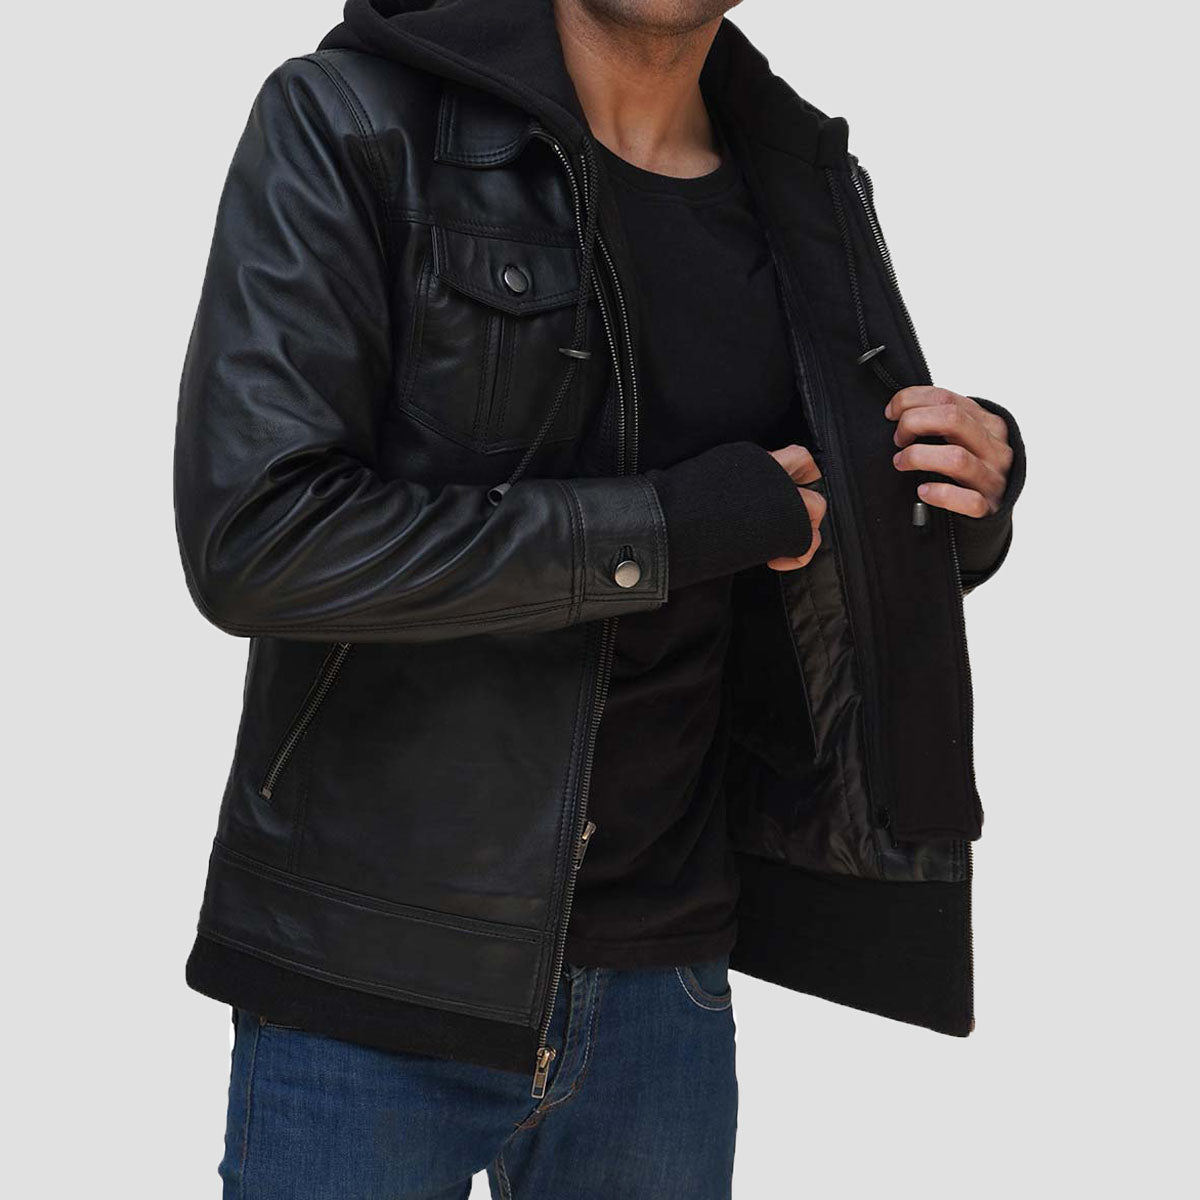 Leather Bomber jacket with Hood